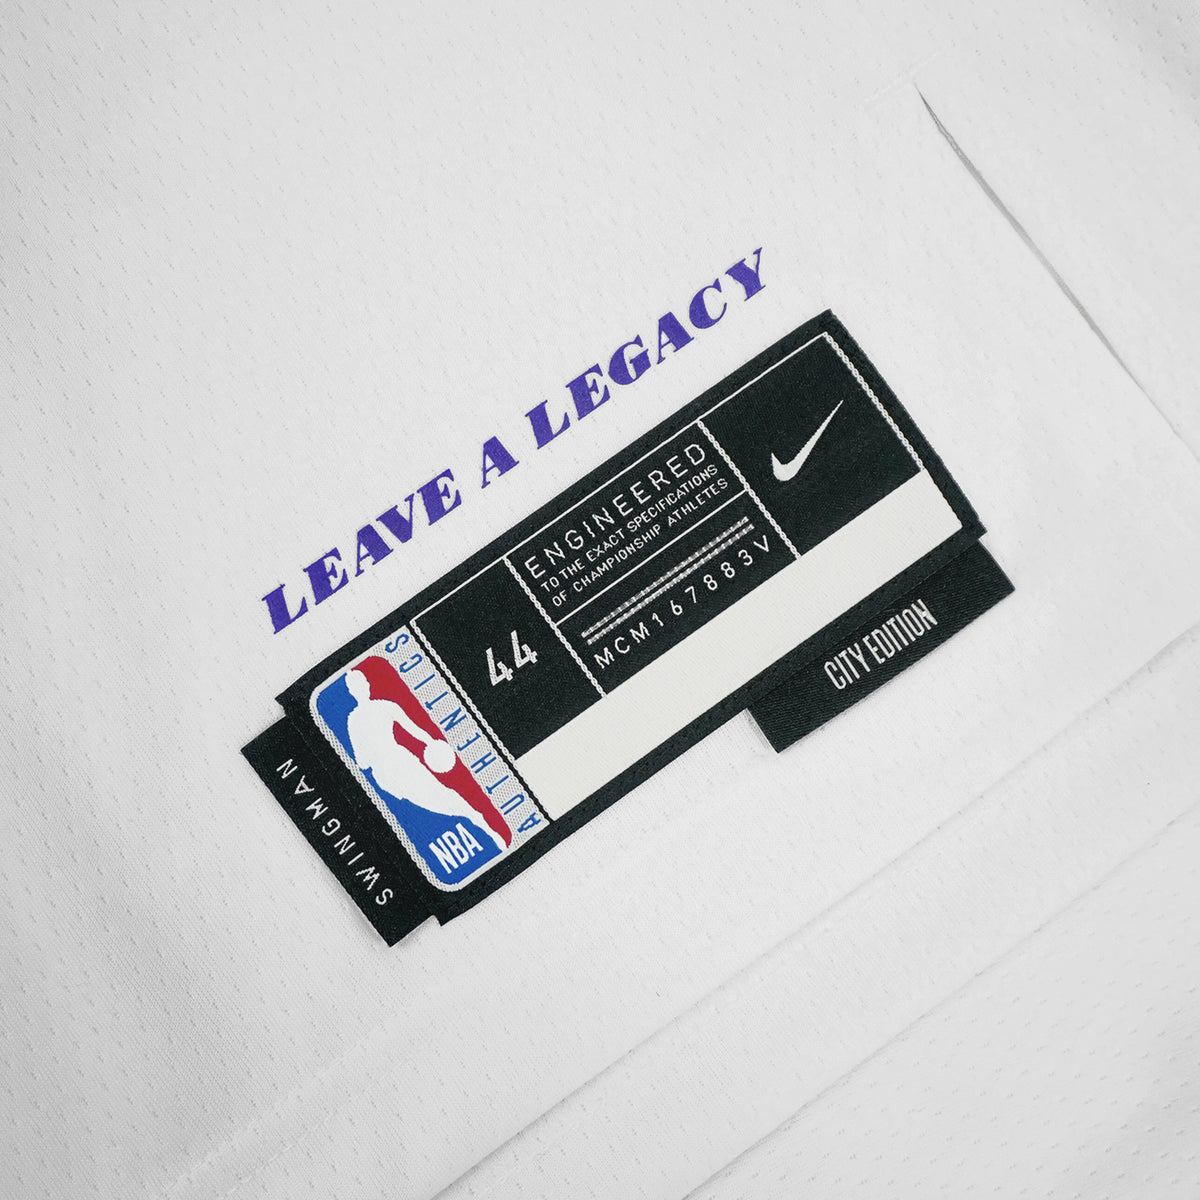 LeBron James Los Angeles Lakers Nike City Edition Swingman Jersey